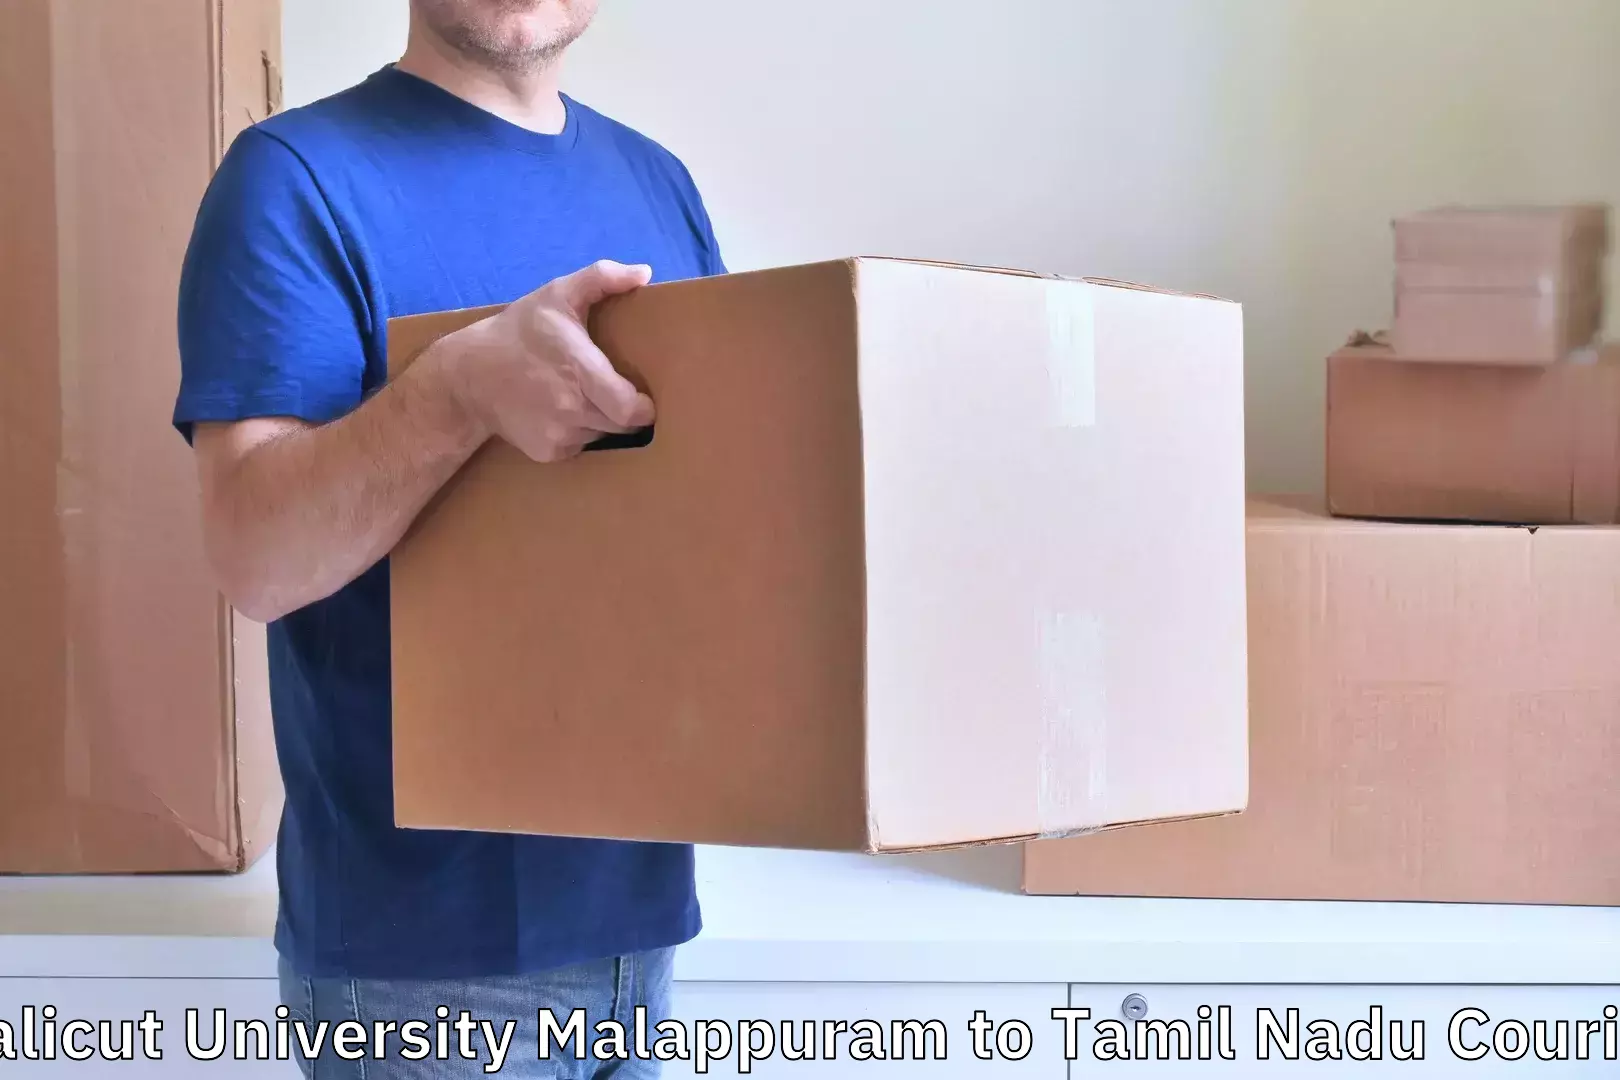 Baggage delivery optimization in Calicut University Malappuram to Palayankottai